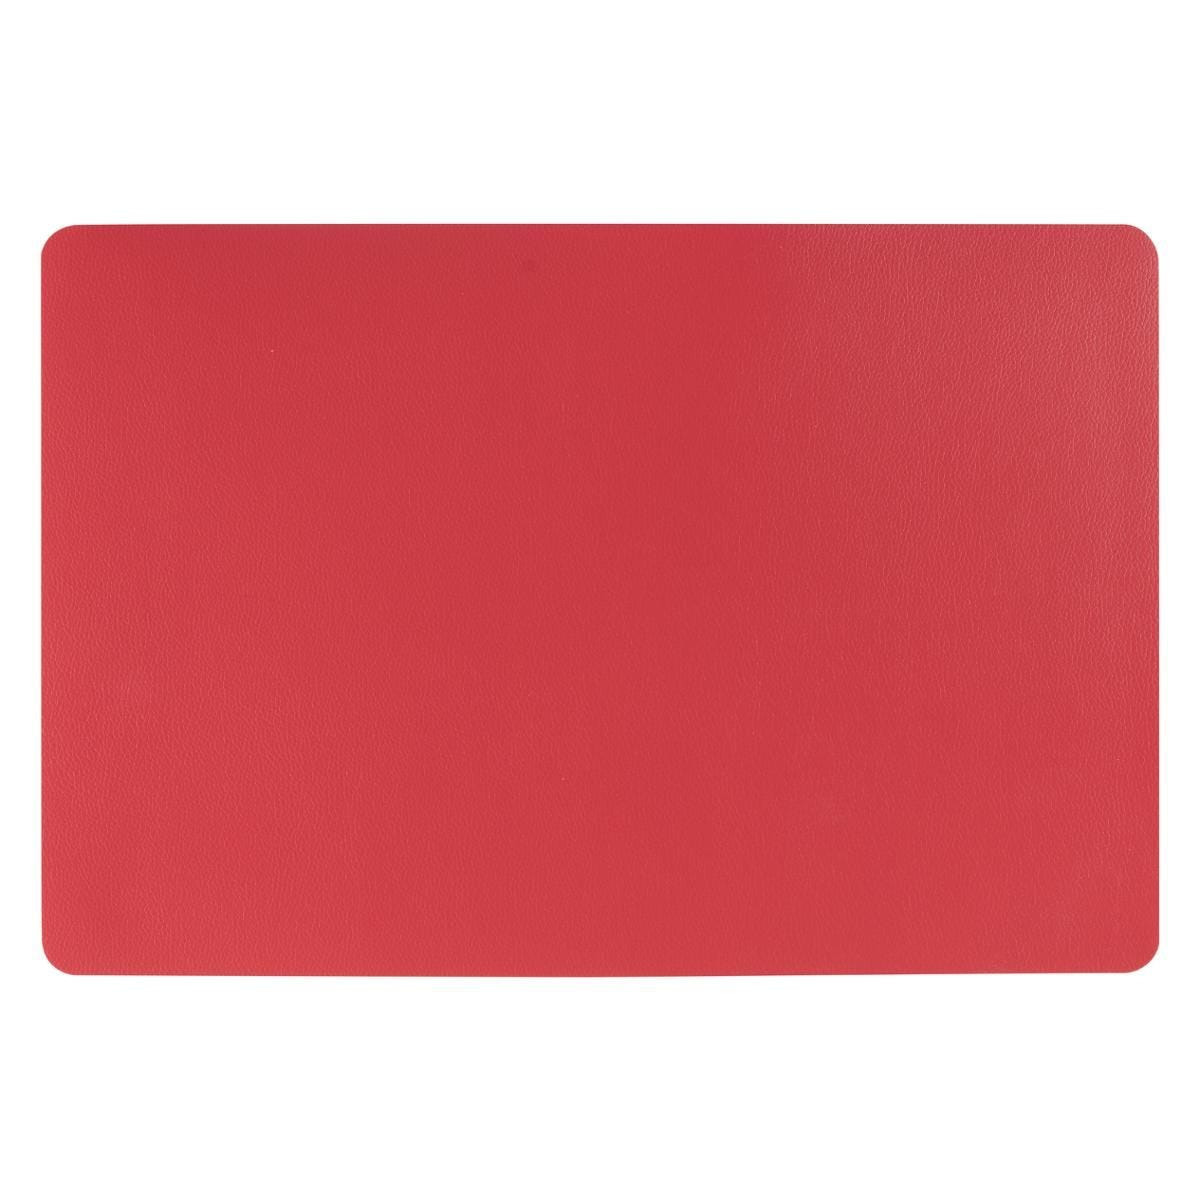 Rechthoekige placemat PU-leer- leer look rood 45 x 30 cm